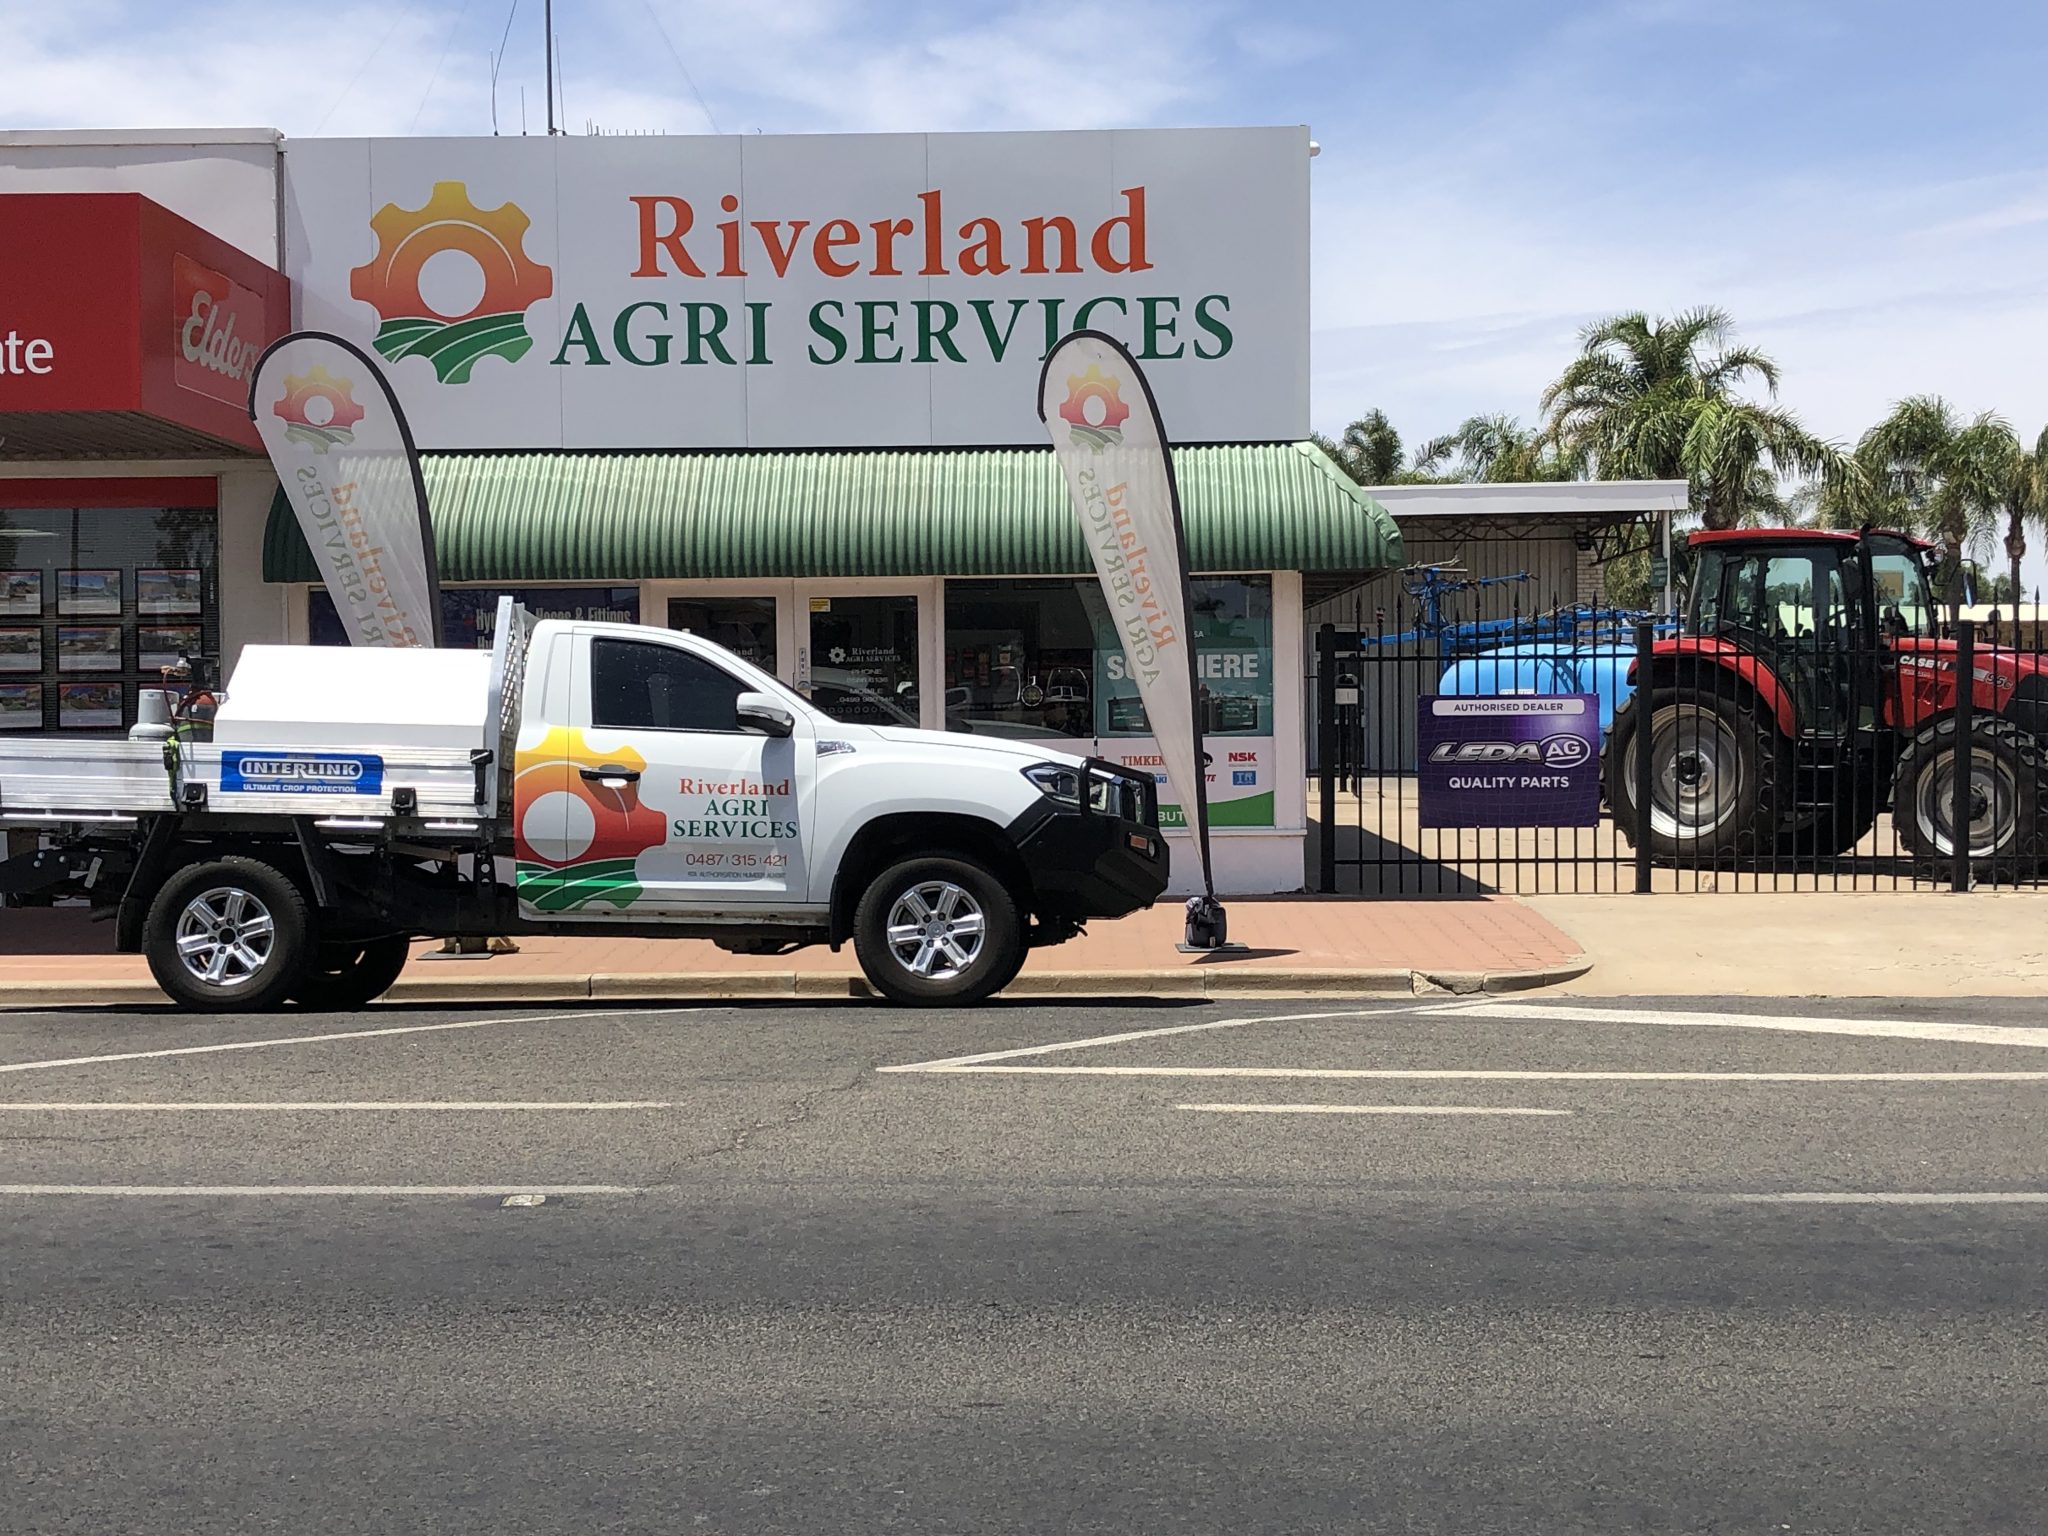 Riverland Agri Services - Service Ute